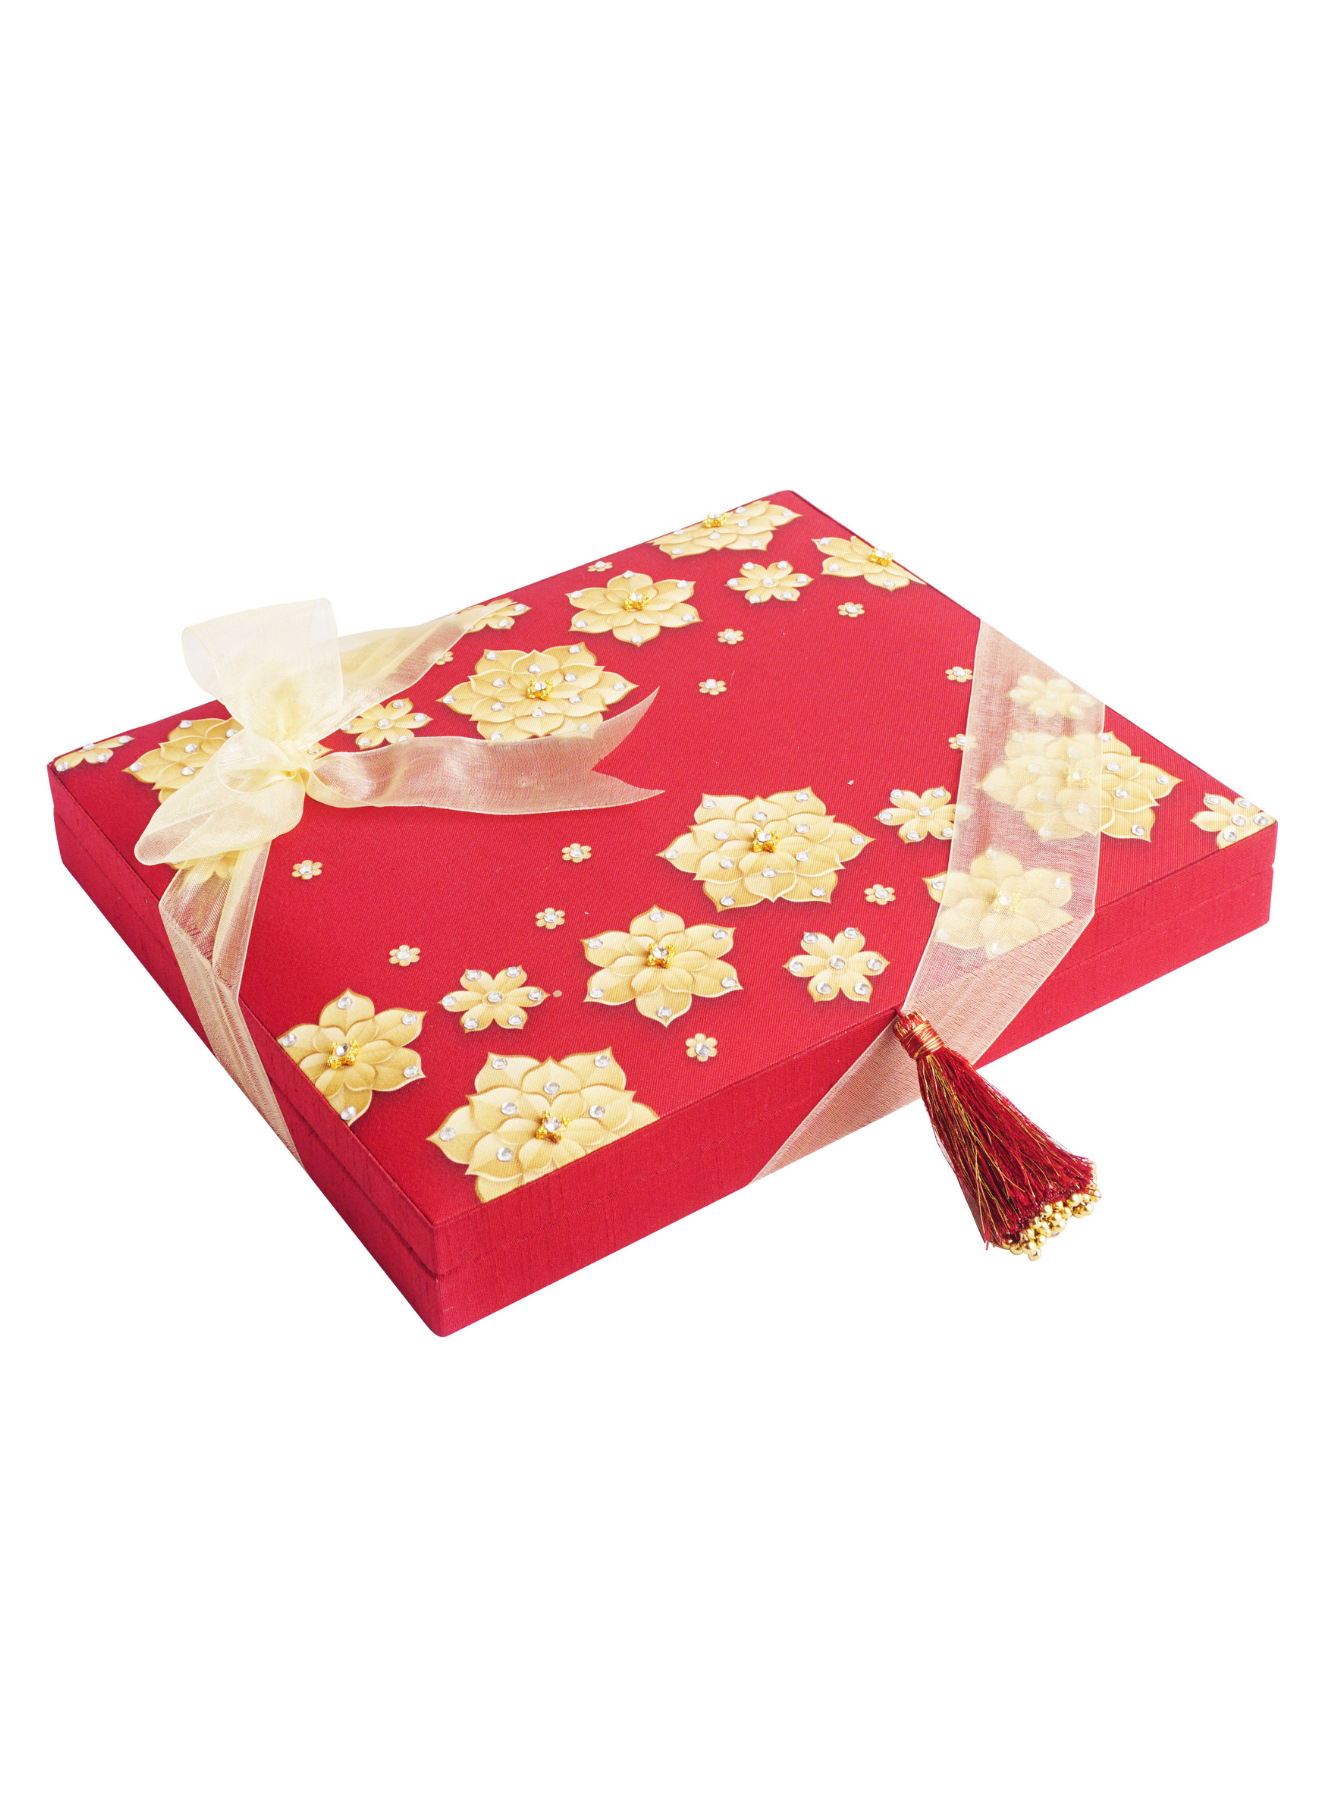 Khidri Dates with Burgundy & Gold Festive Silk Box (21 Pcs)